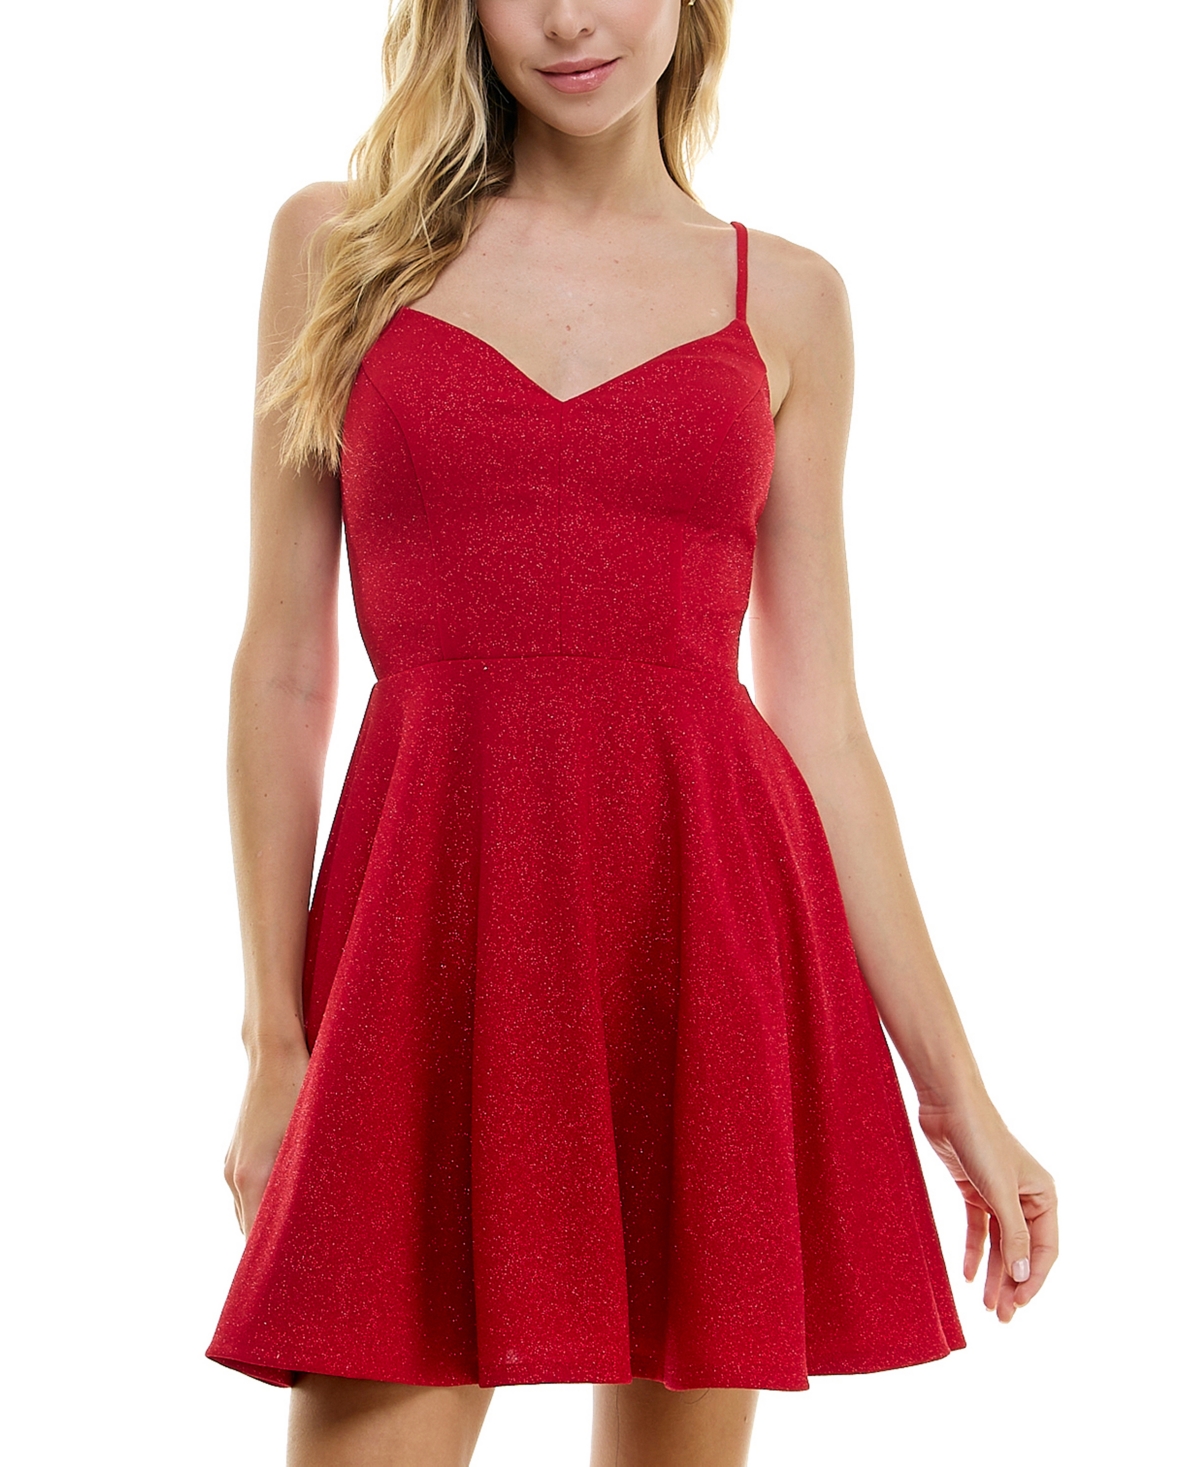 Trendy Plus Size Off-The-Shoulder Slit Gown